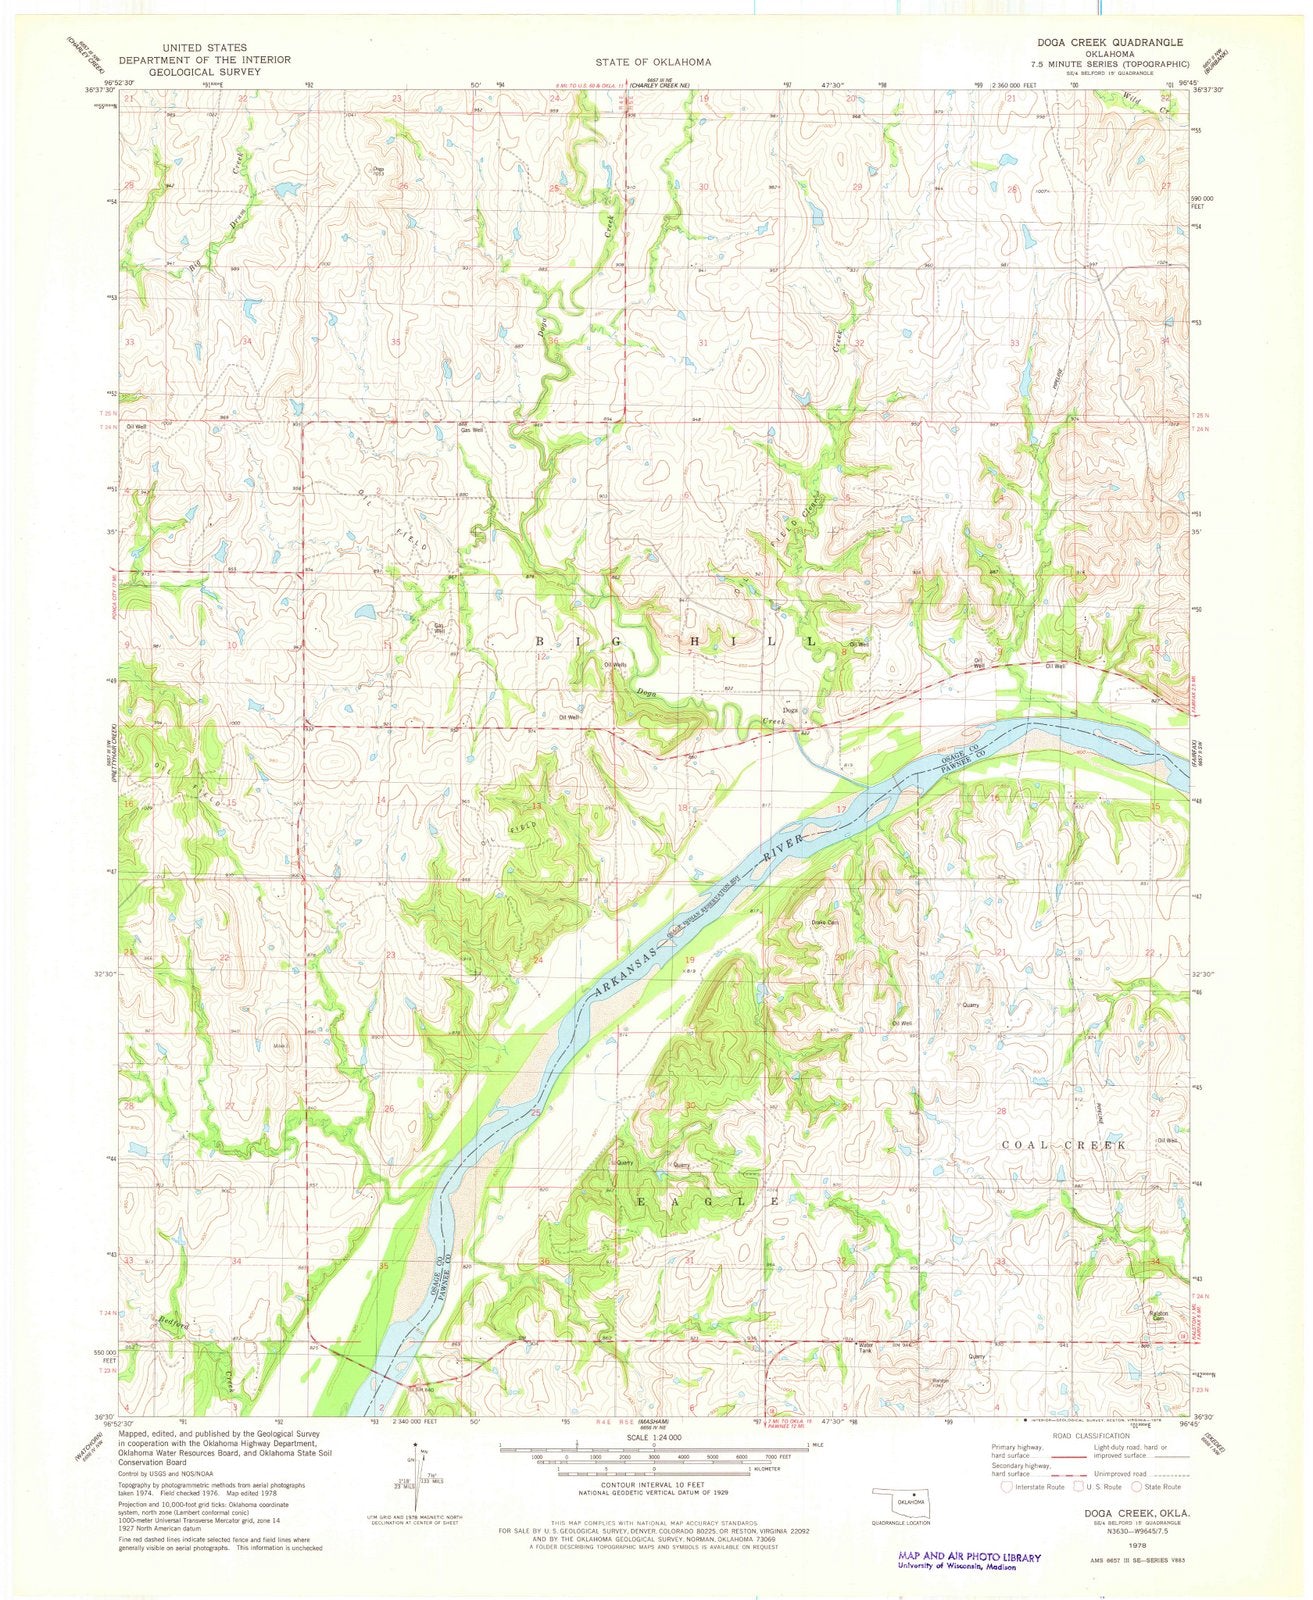 1978 Doga Creek, OK - Oklahoma - USGS Topographic Map